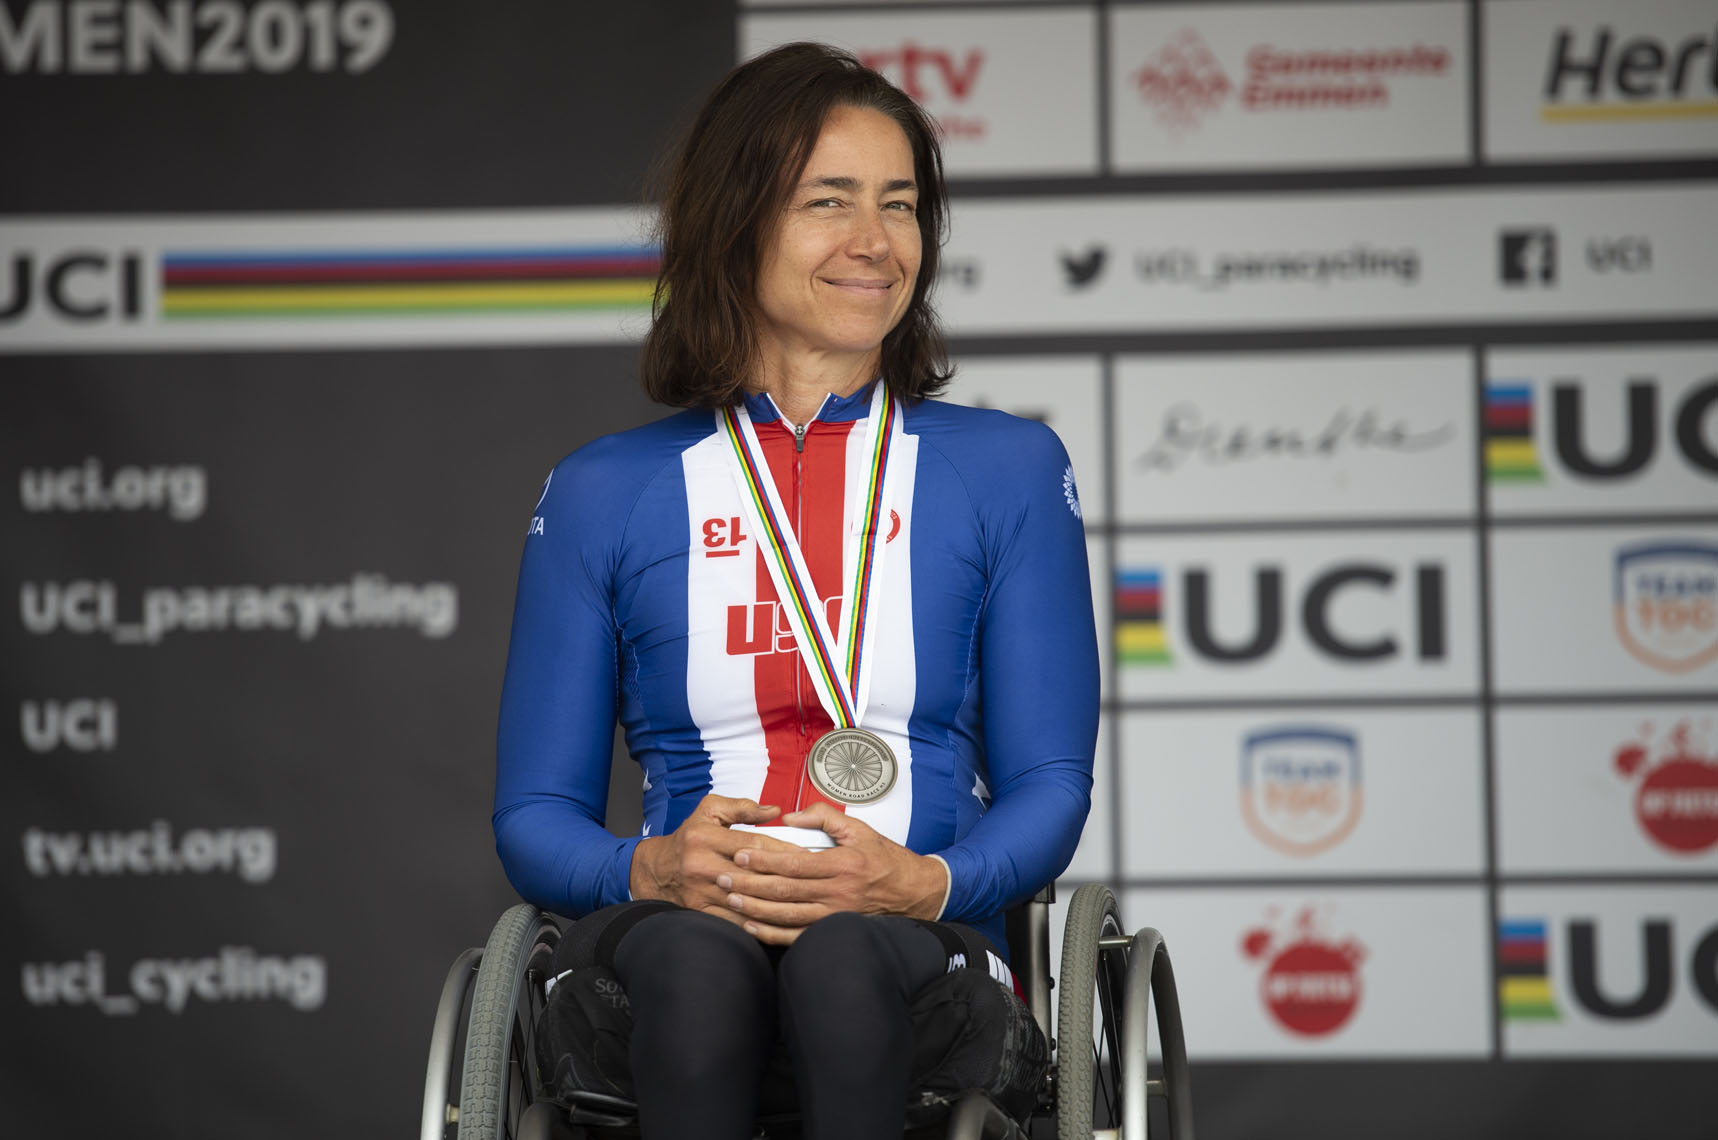 Alicia Dana, 2019 Paracycling Road World Championships